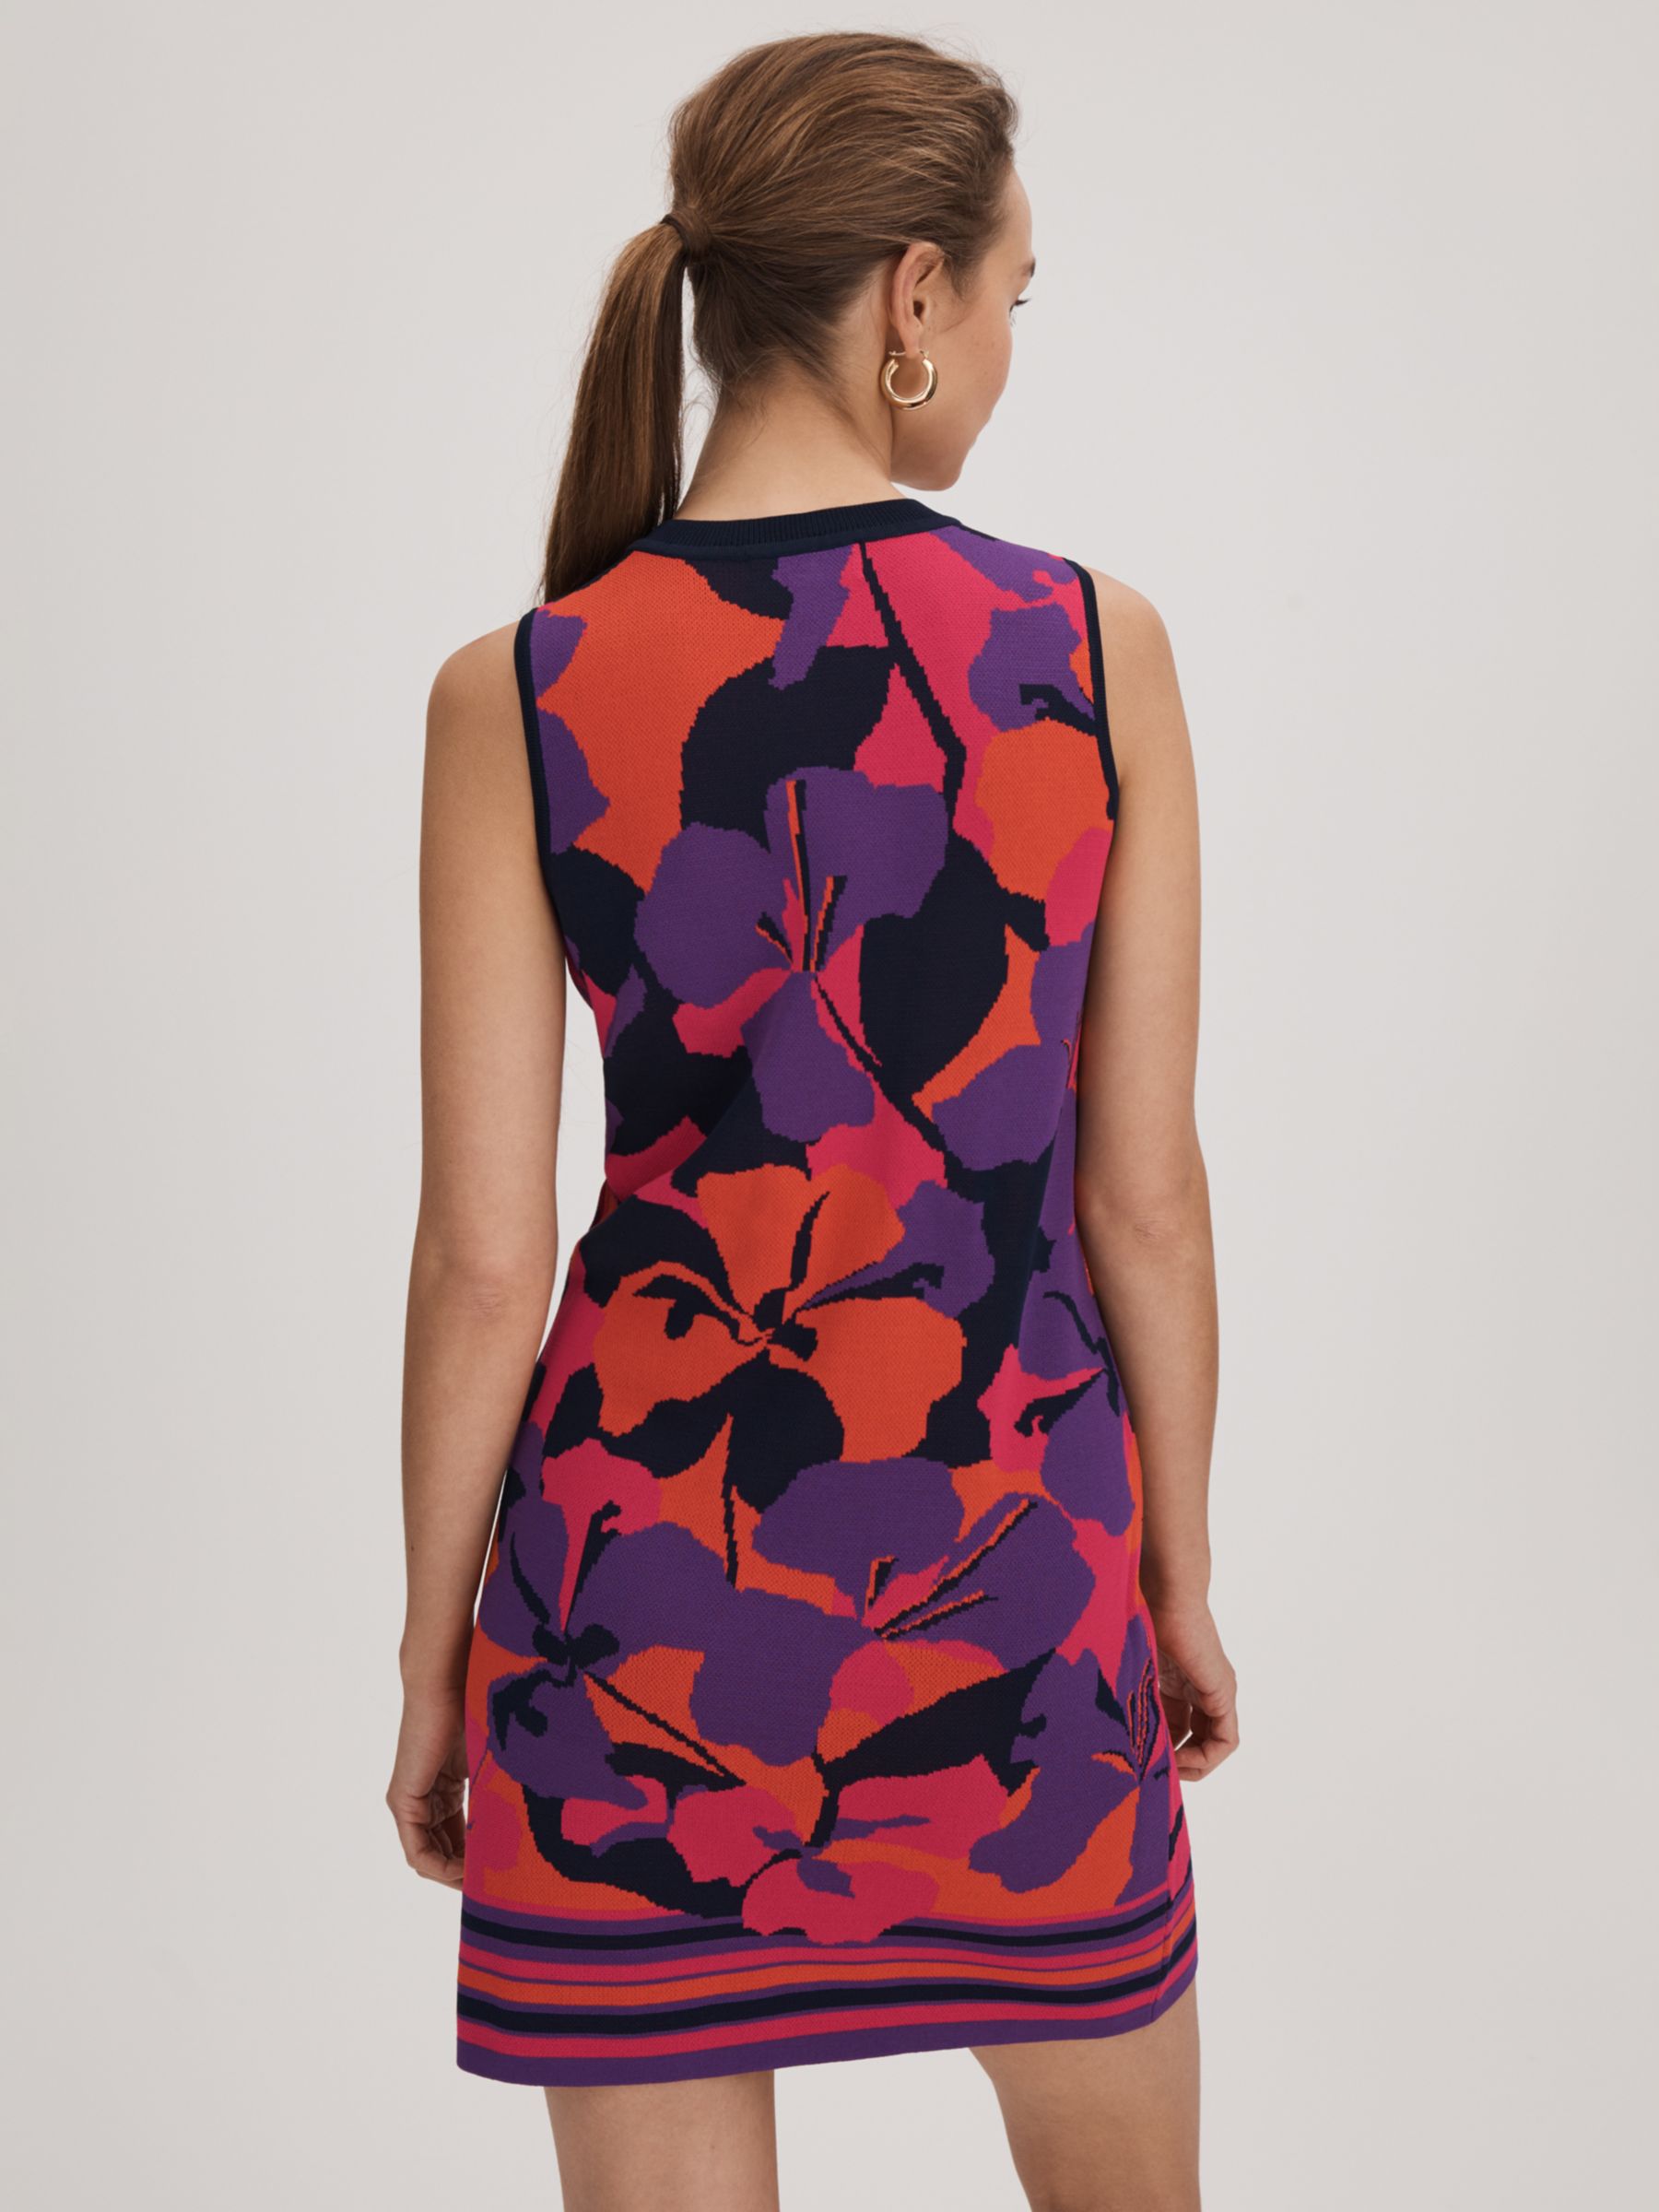 FLORERE Jacquard Knit Abstract Floral Mini Dress, Pink/Multi, 8